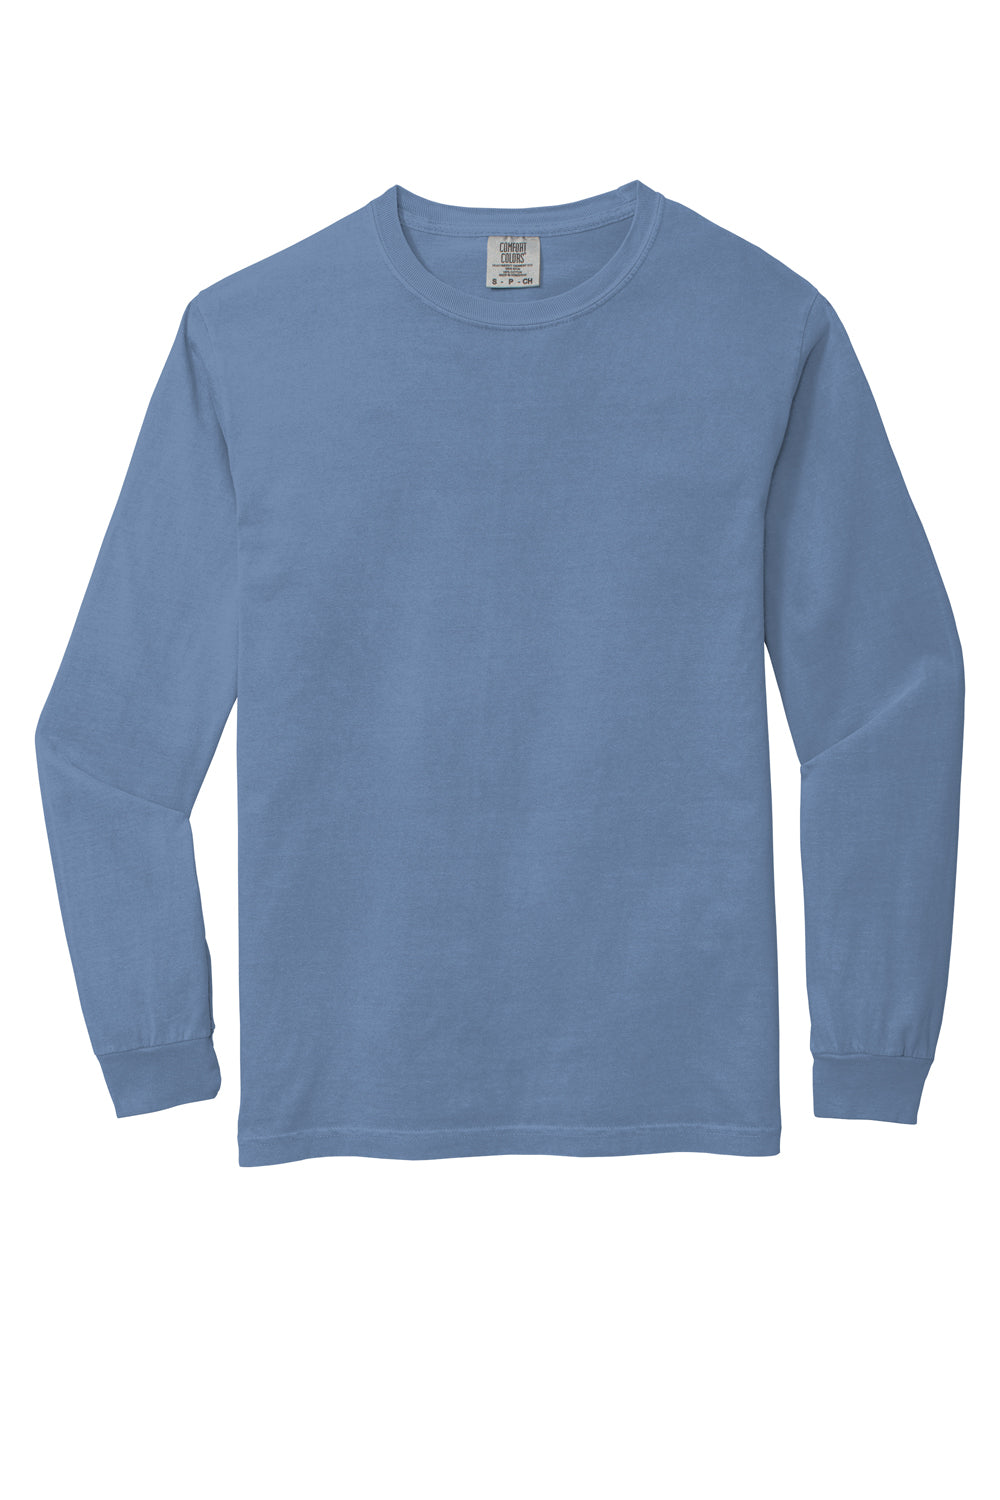 Comfort Colors 6014/C6014 Mens Long Sleeve Crewneck T-Shirt Washed Denim Blue Flat Front